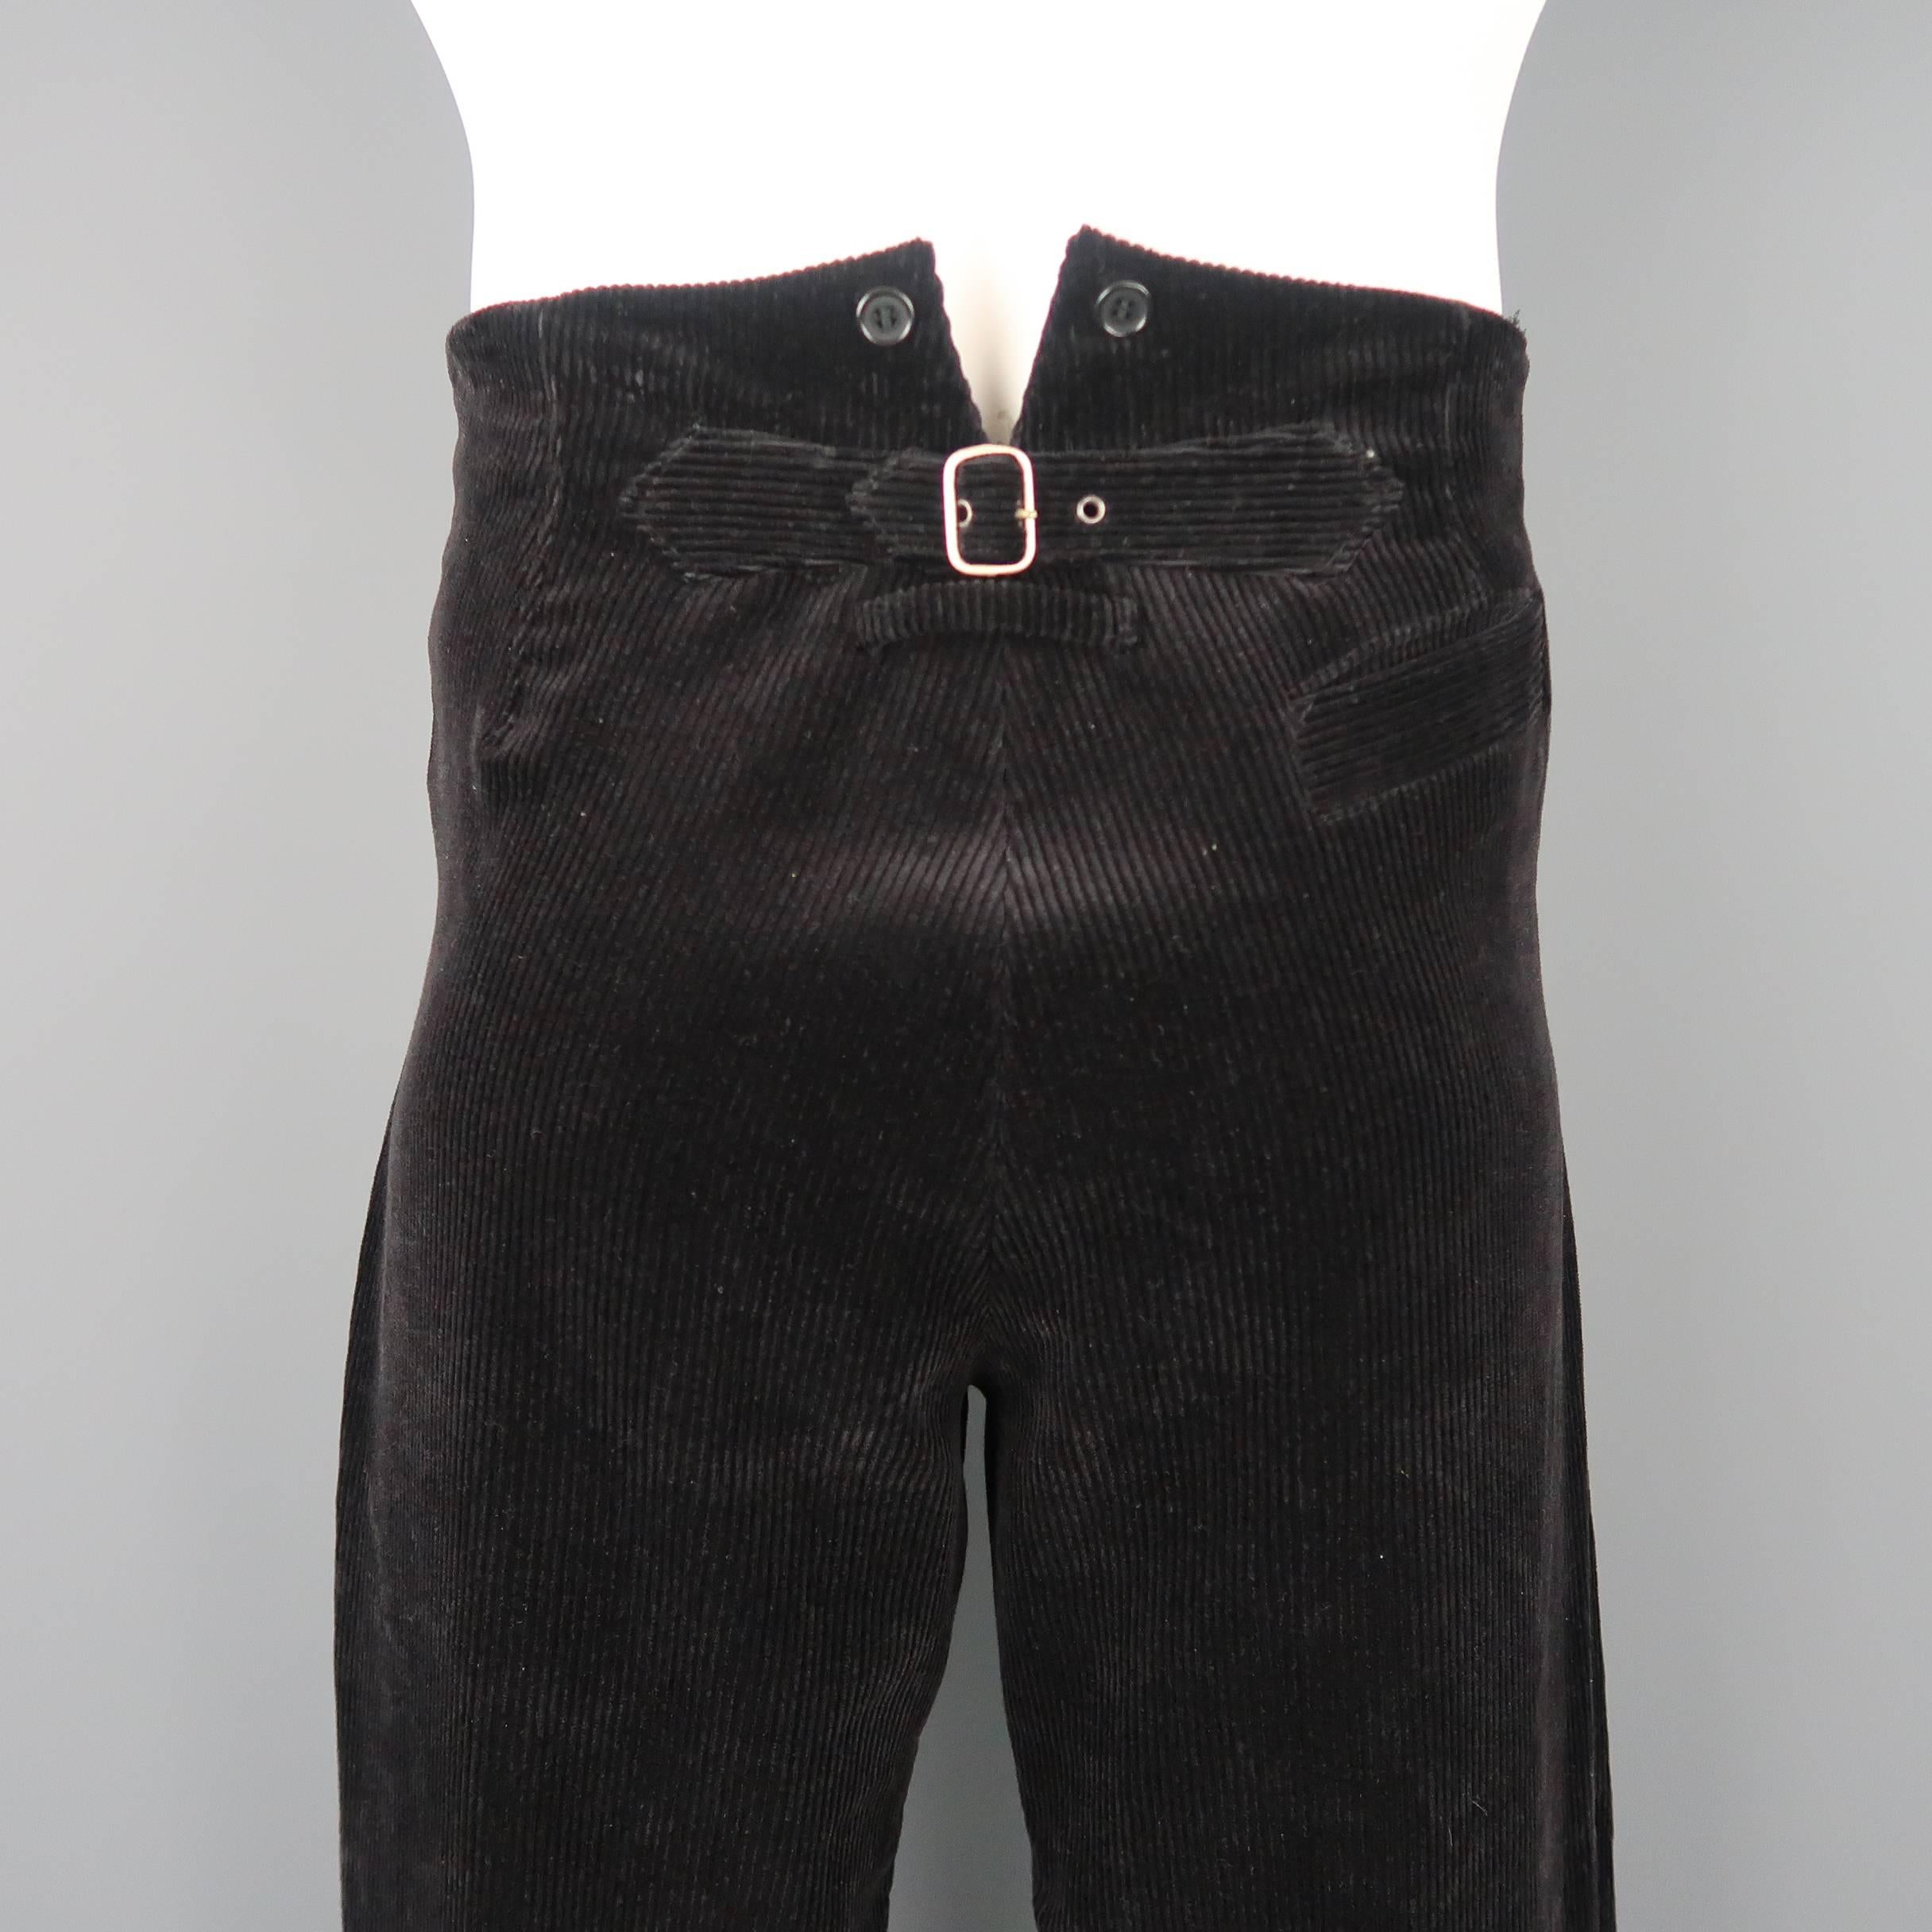 Jean Paul Gaultier Men's Black Corduroy Bull Head Button Dress Pants 3